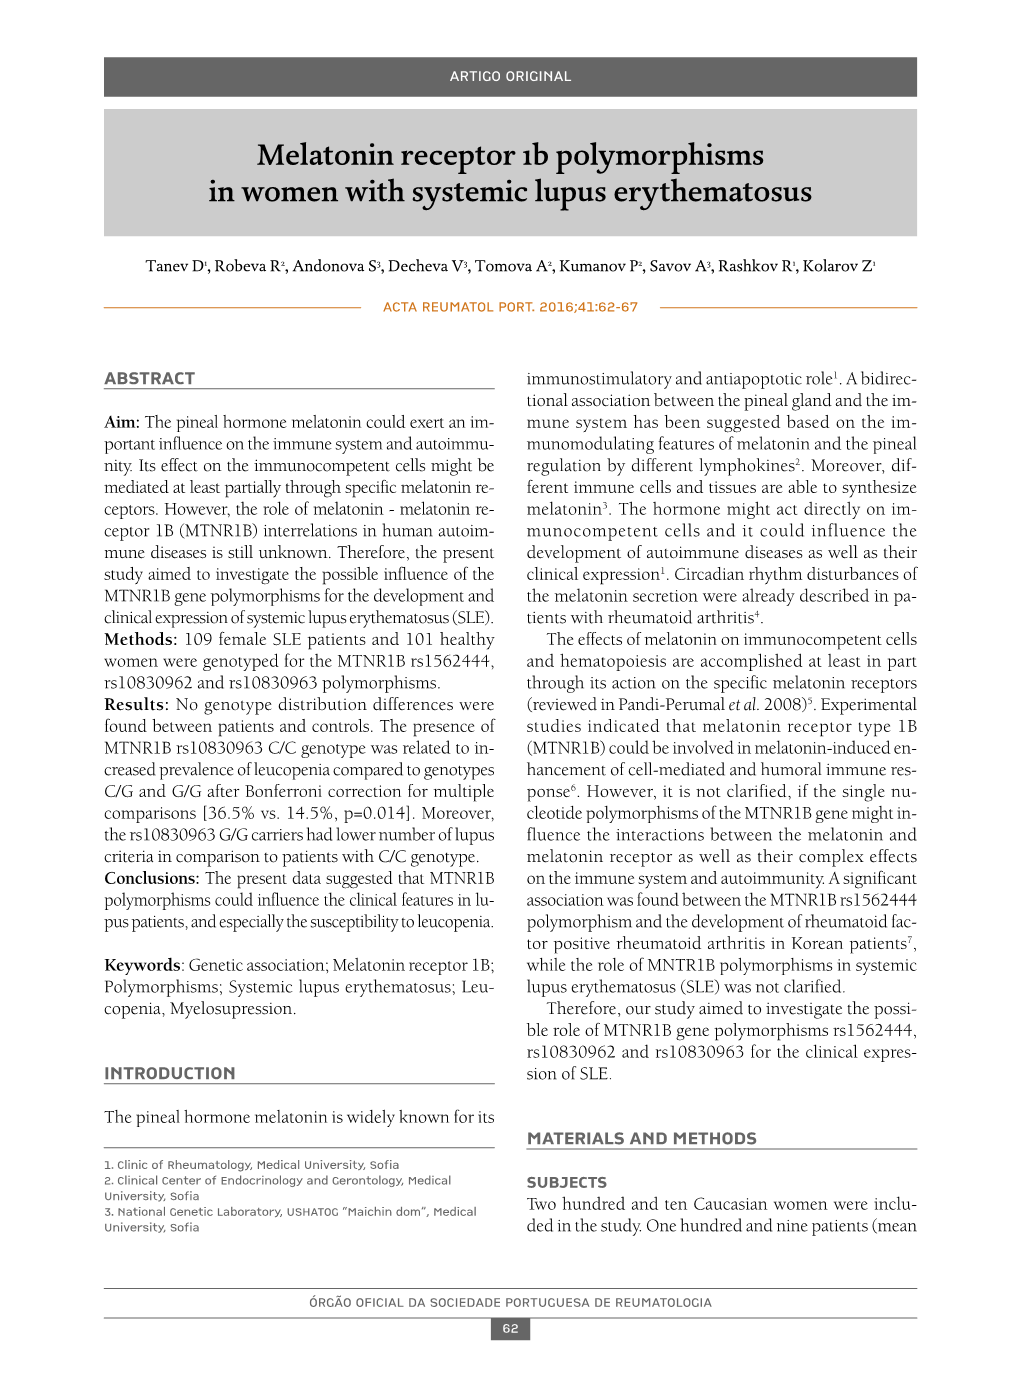 Melatonin Receptor 1B Polymorphisms in Women with Systemic Lupus Erythematosus